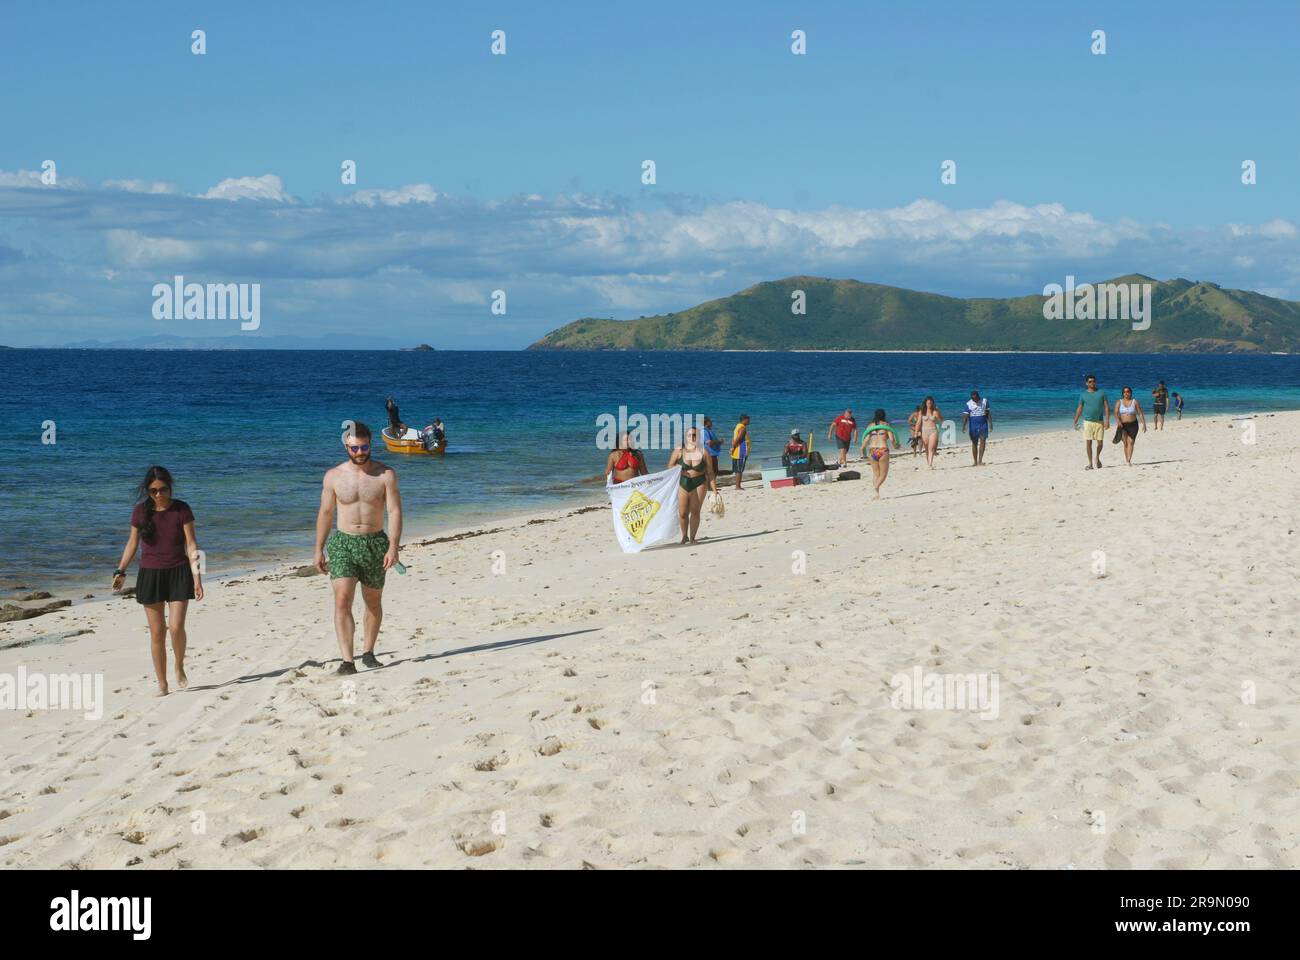 Modriki Island o Cast Away Island, location del film di Tom Hank «Cast Away», Fiji, Oceano Pacifico meridionale. Foto Stock